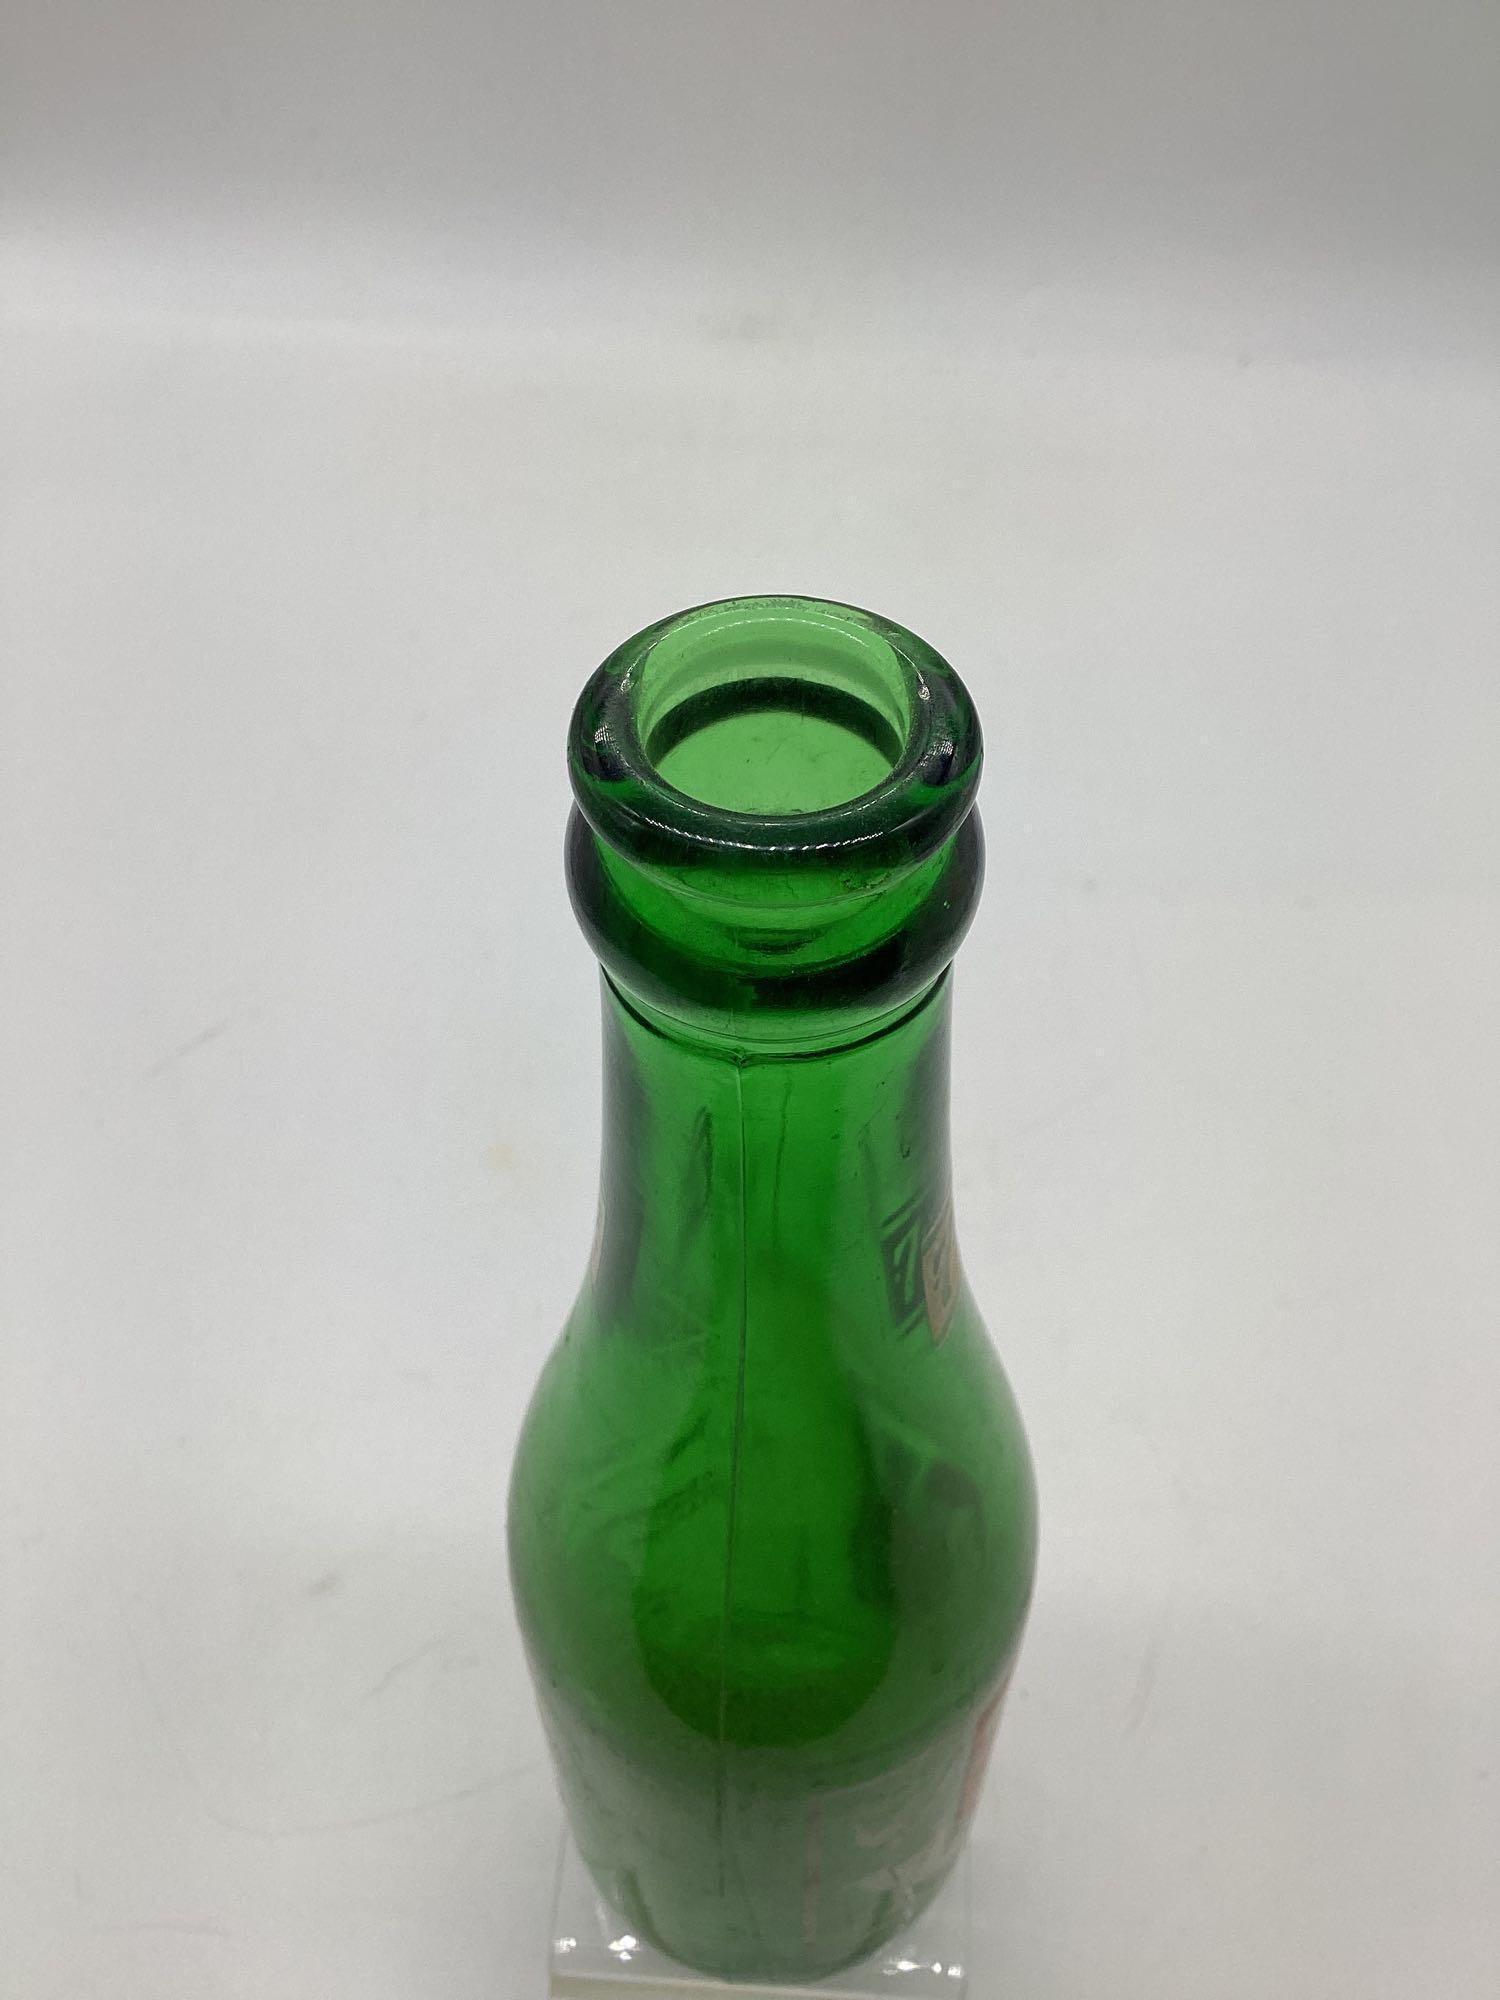 7-Up Green Soda Bottle Tulsa, OK